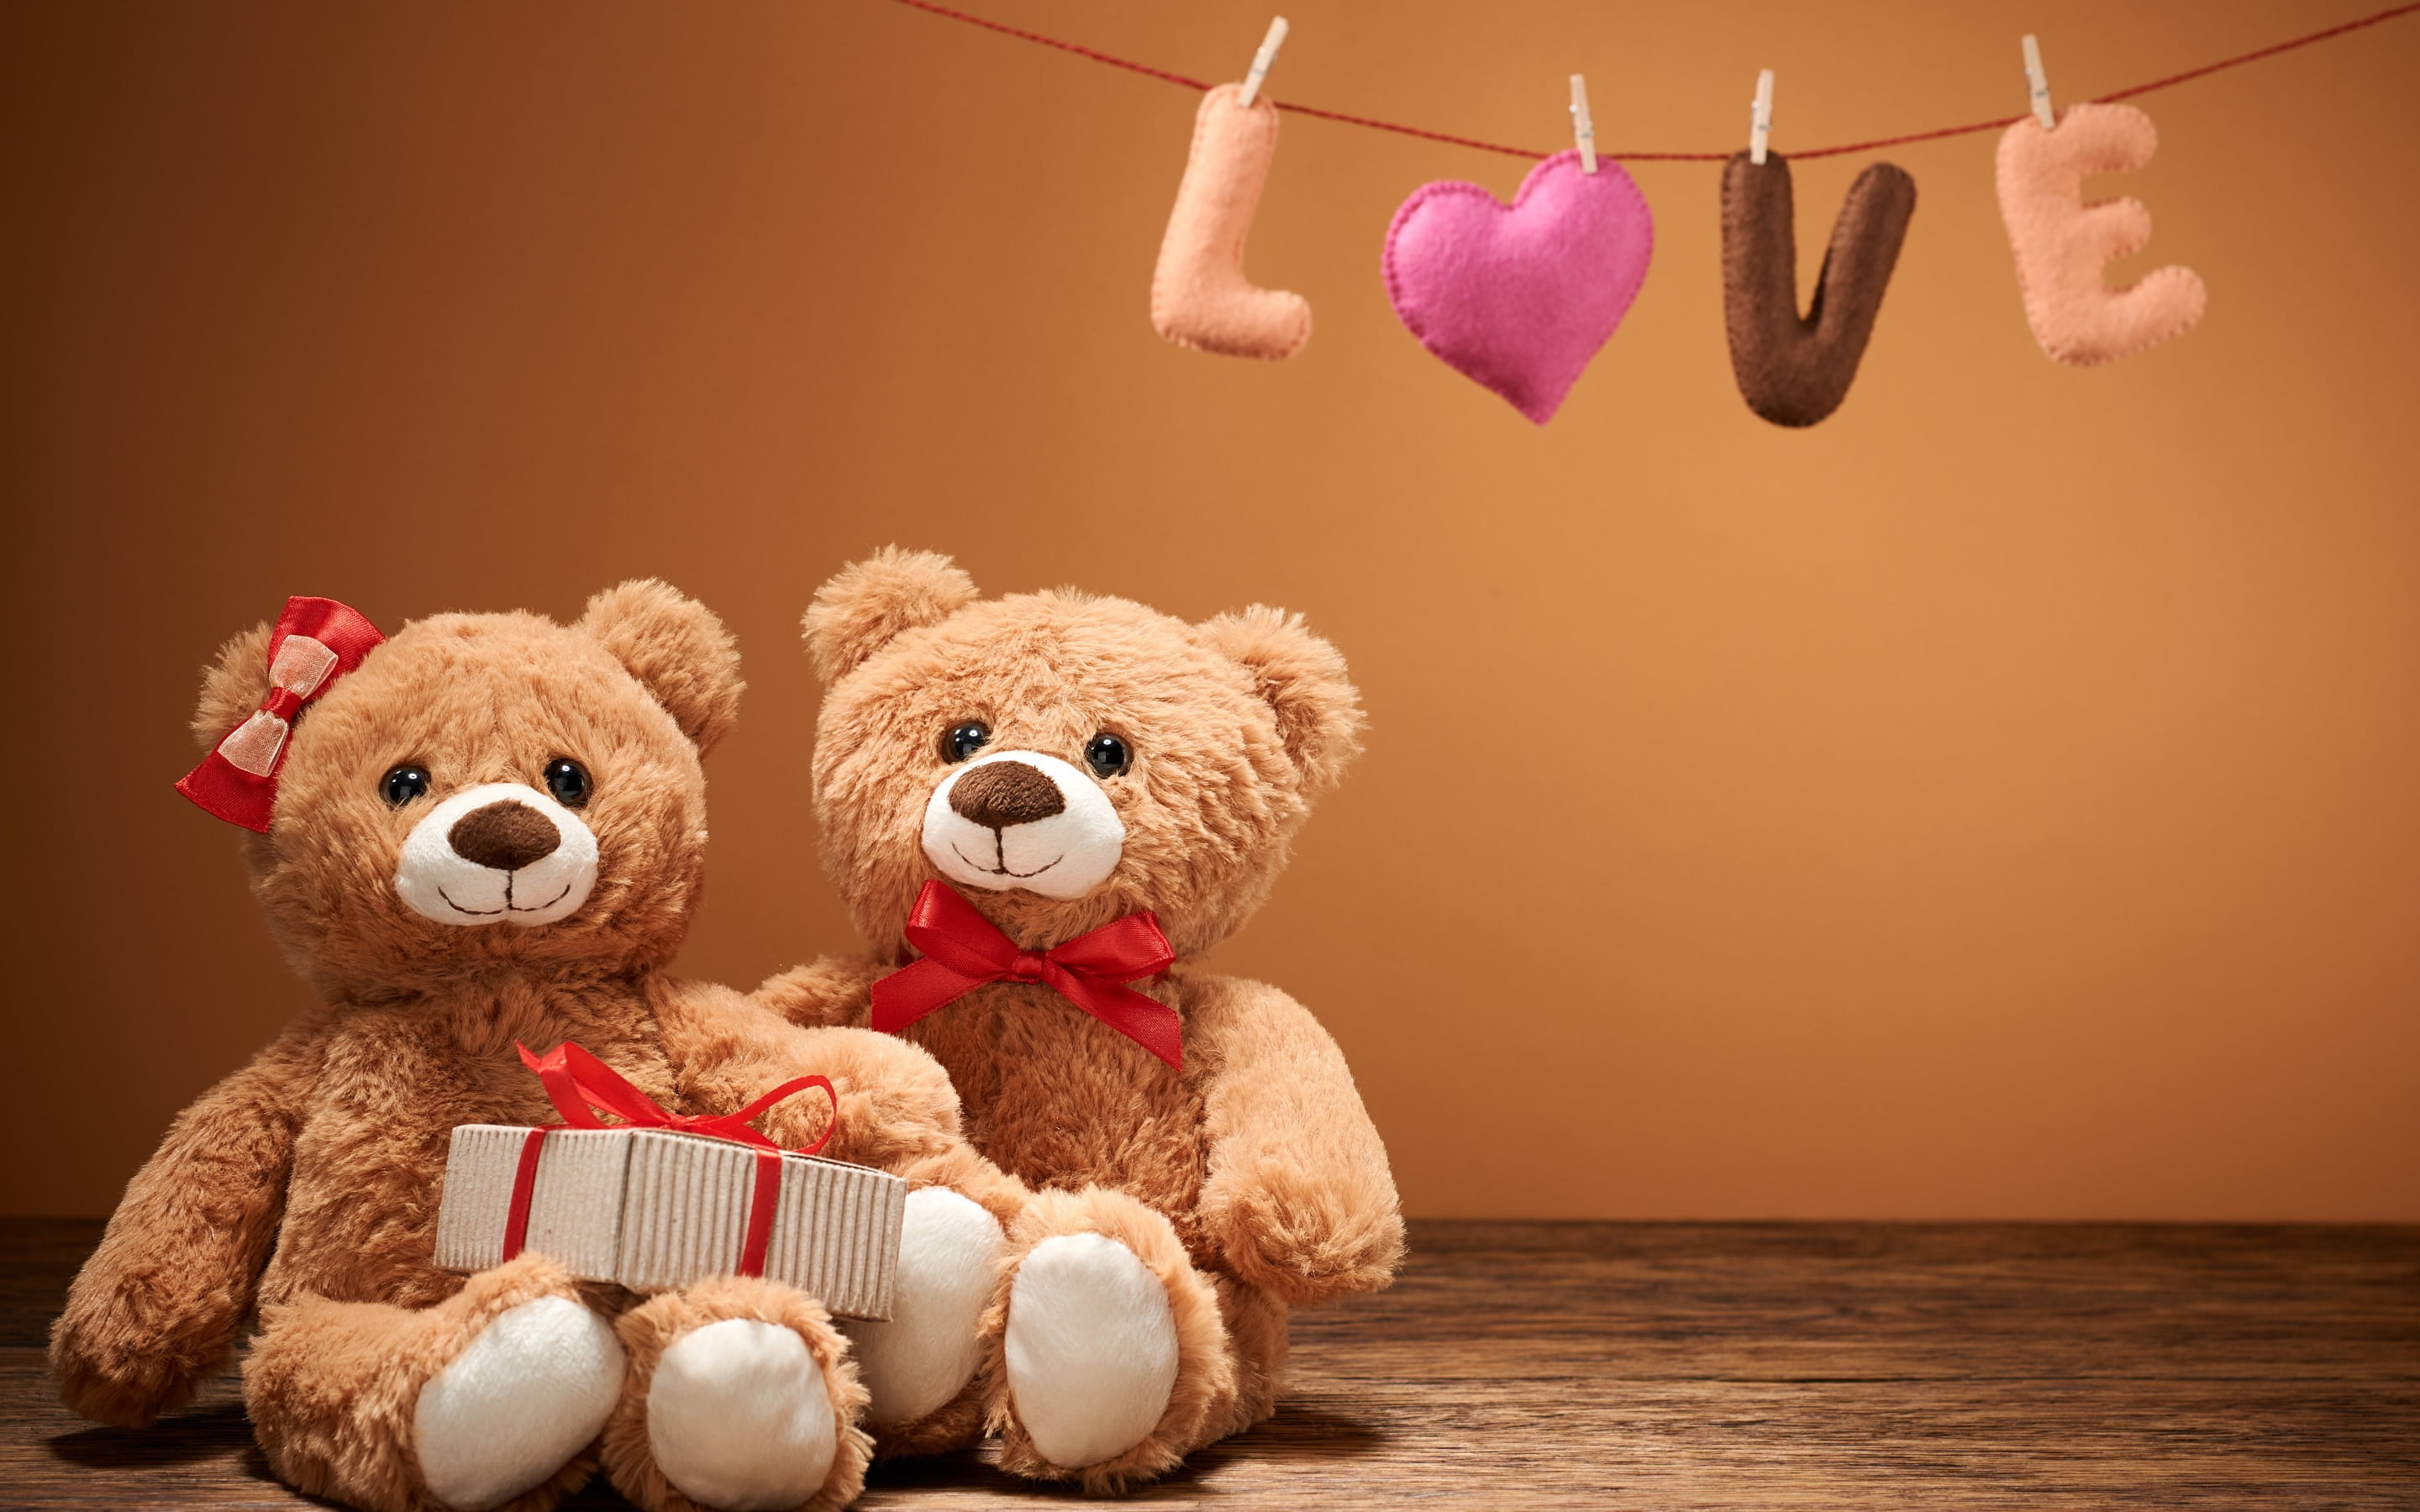 Love Sweet Heart Romantic Teddy, two brown bear plush toys, teddy bear